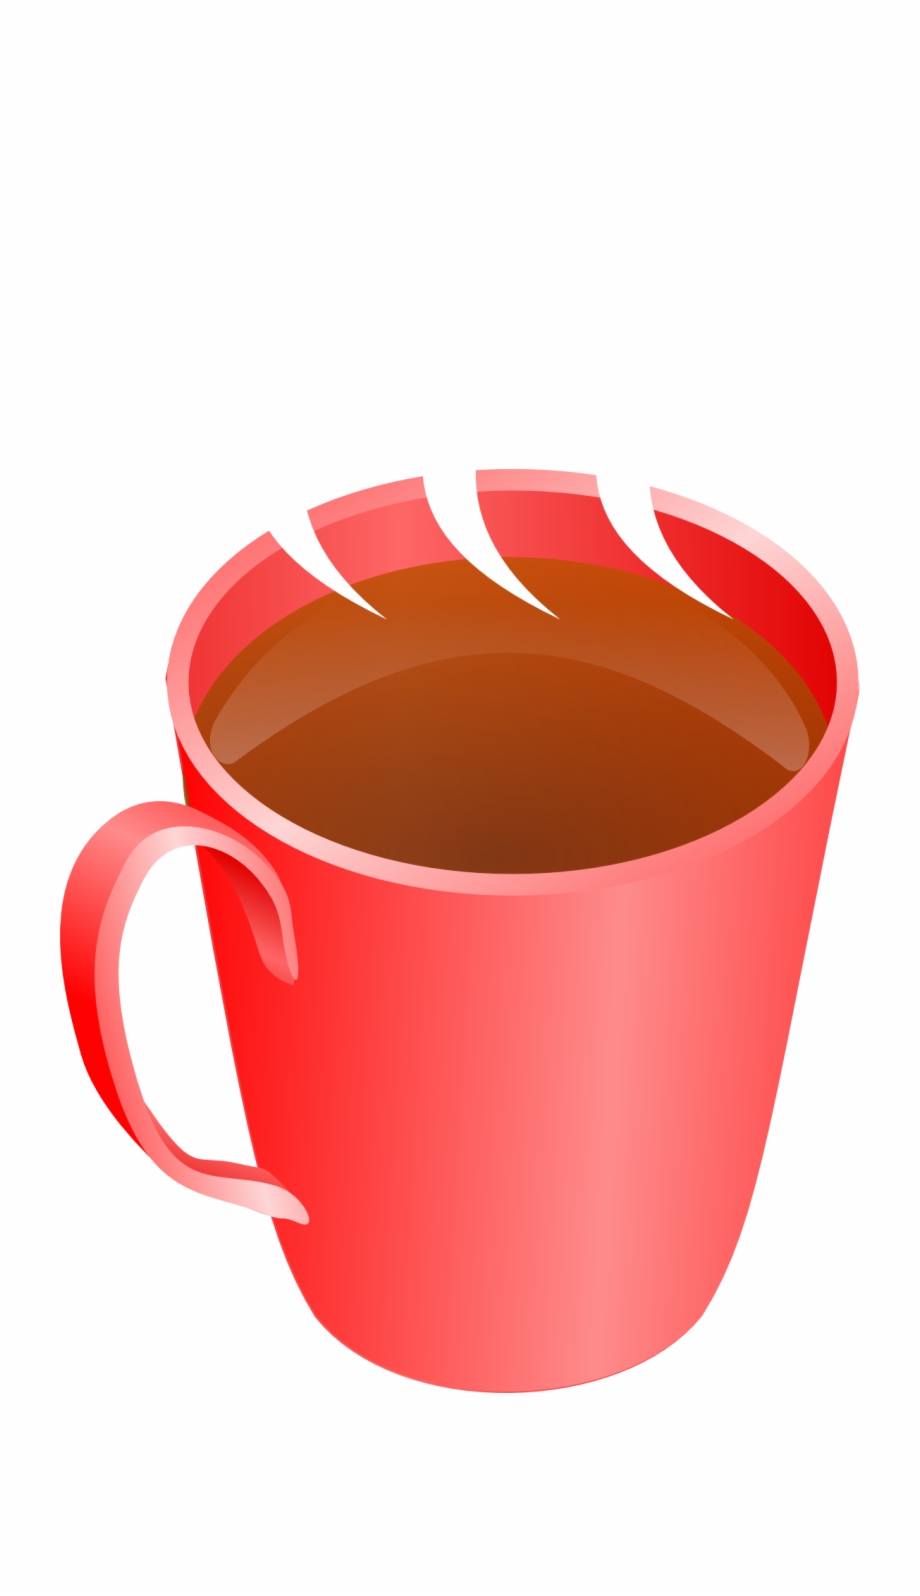 Clip Royalty Free Hot Chocolate Mug Clipart Cartoon